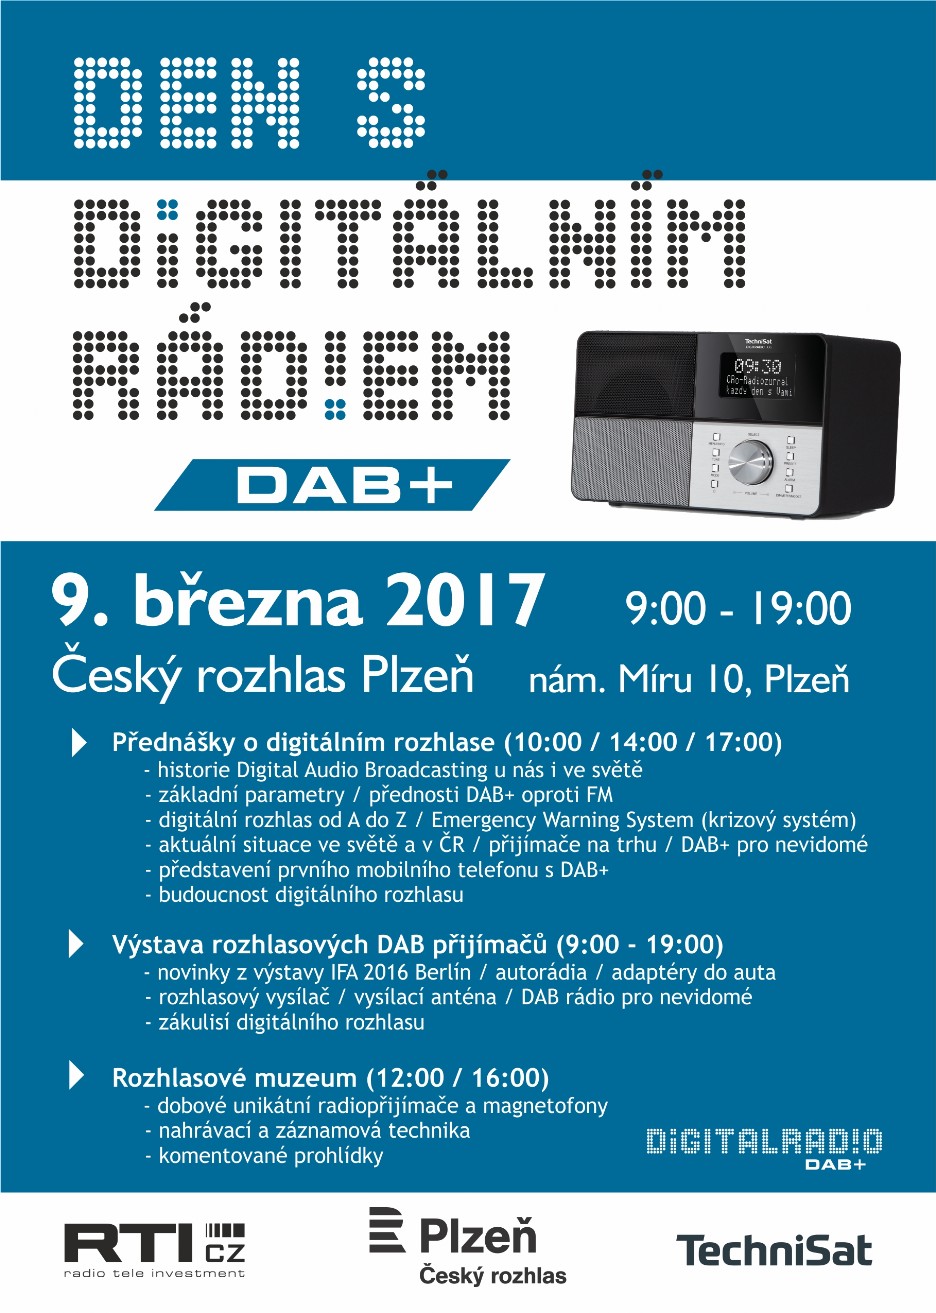 Den-s-DAB-radiem_2017-09-03_letak_b